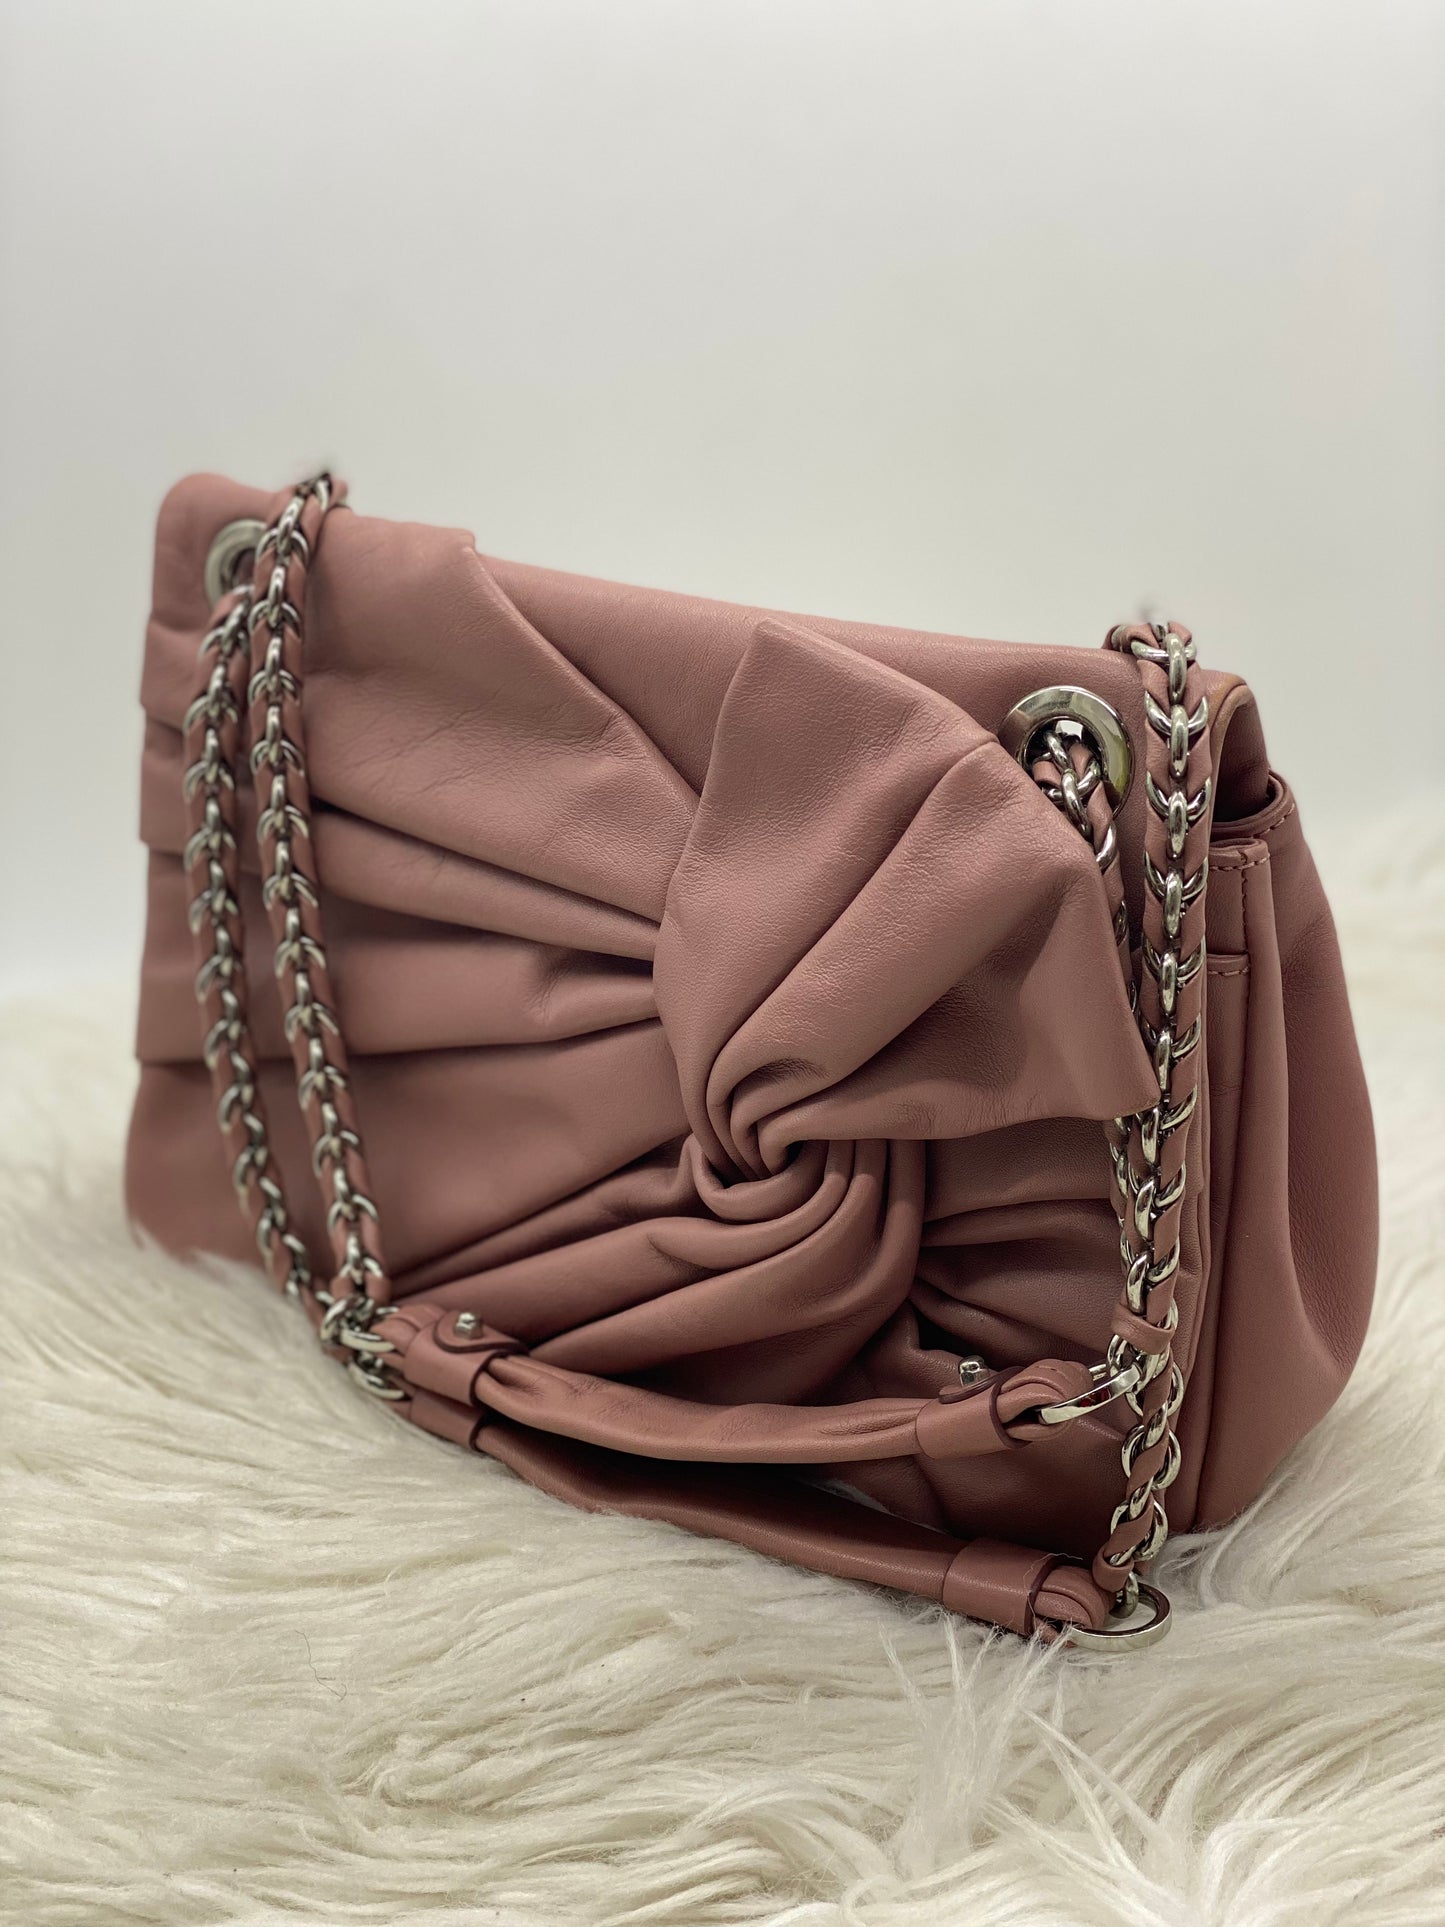 Nina Ricci chain sling bag